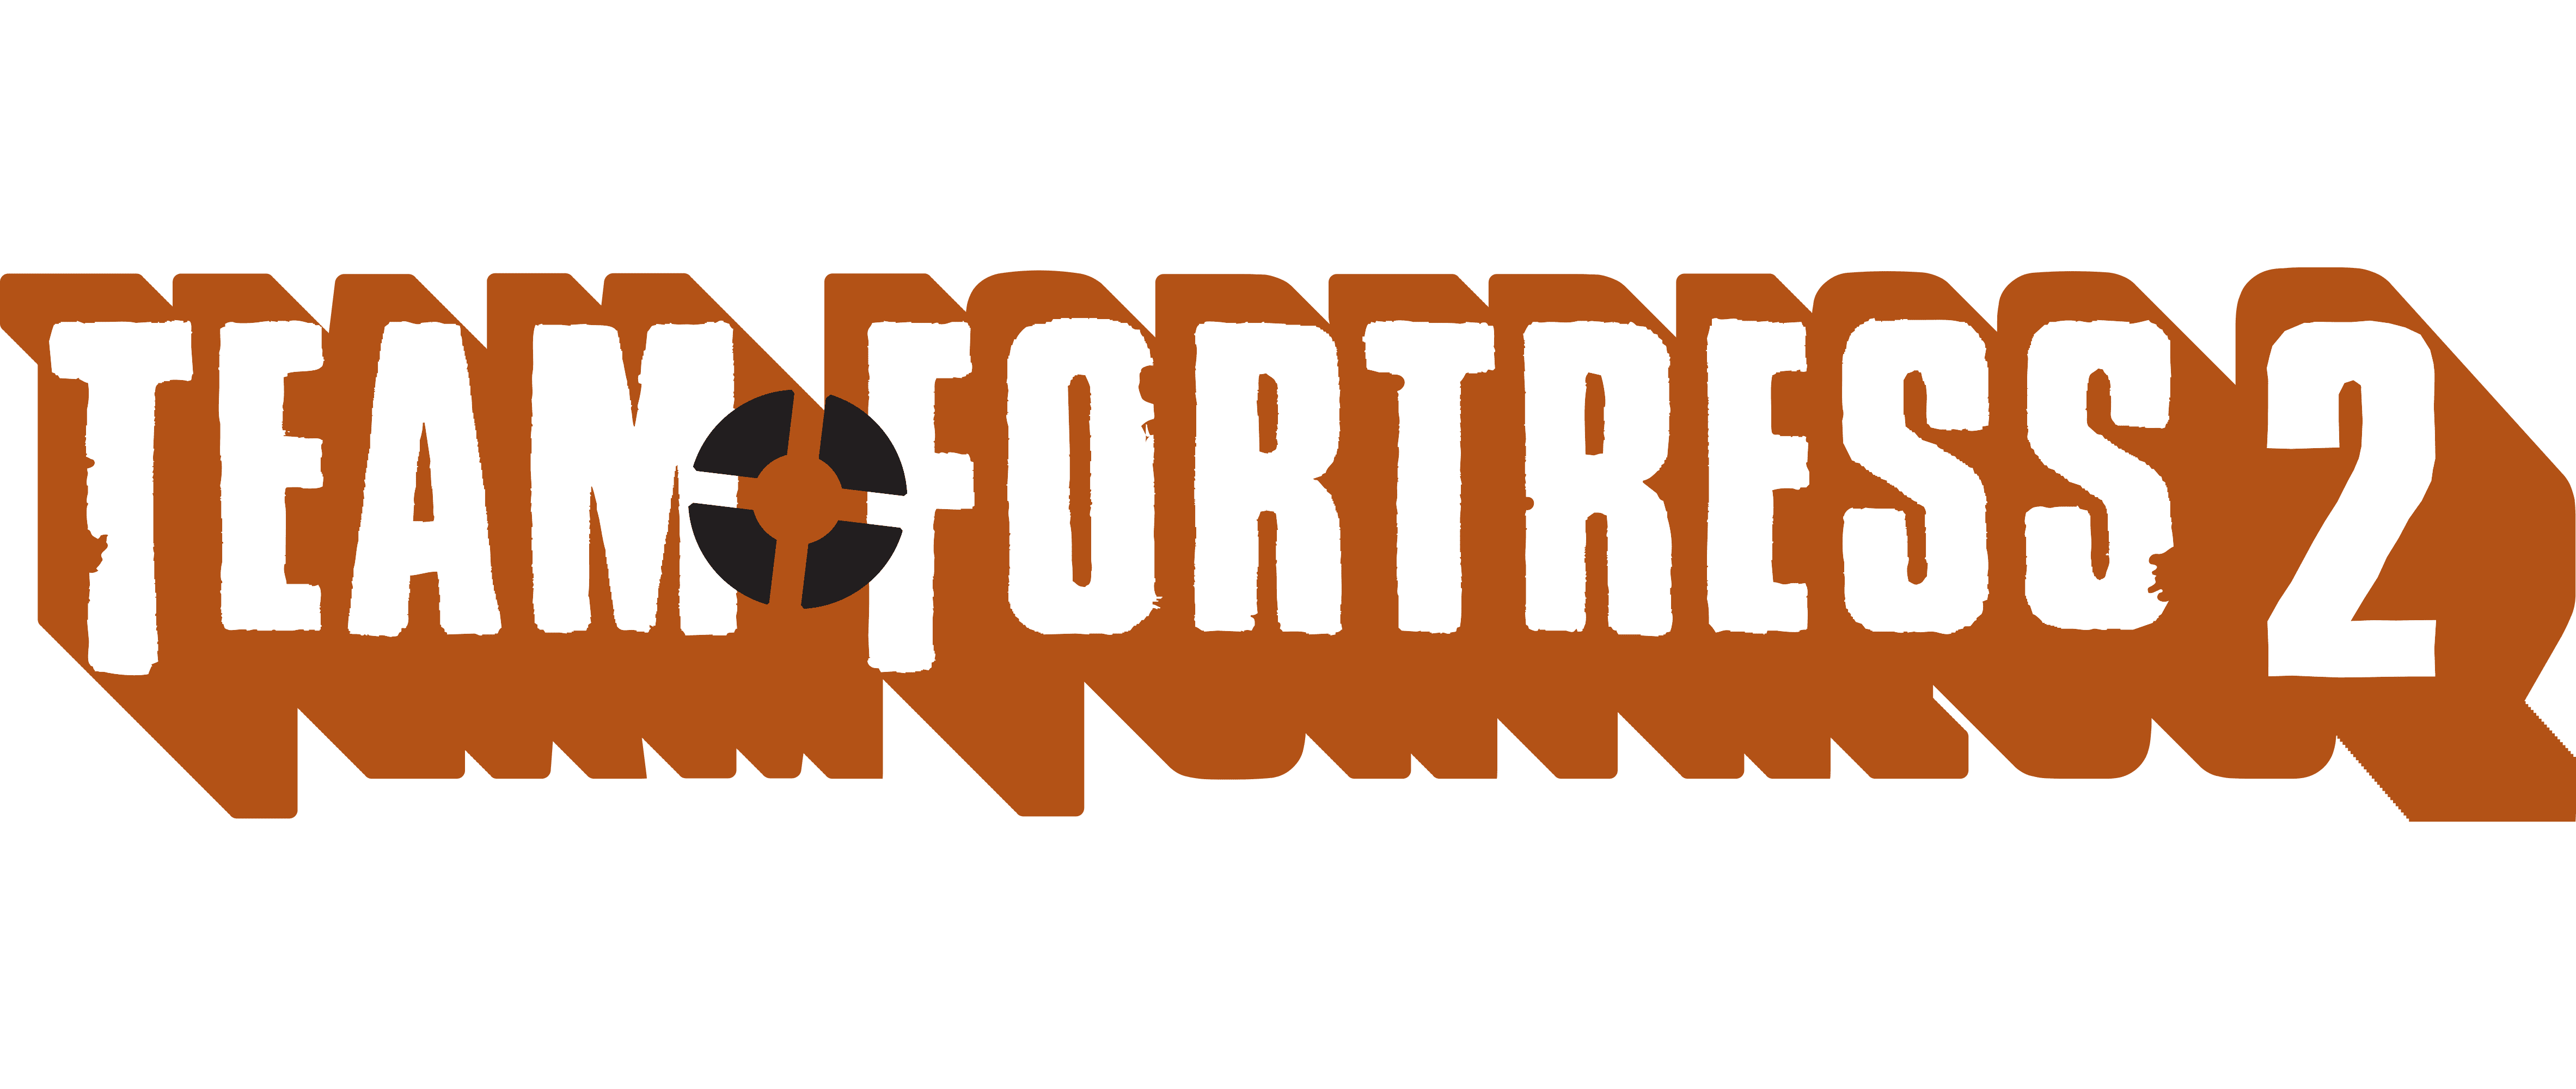 Team Fortress 2 Logo Transparent